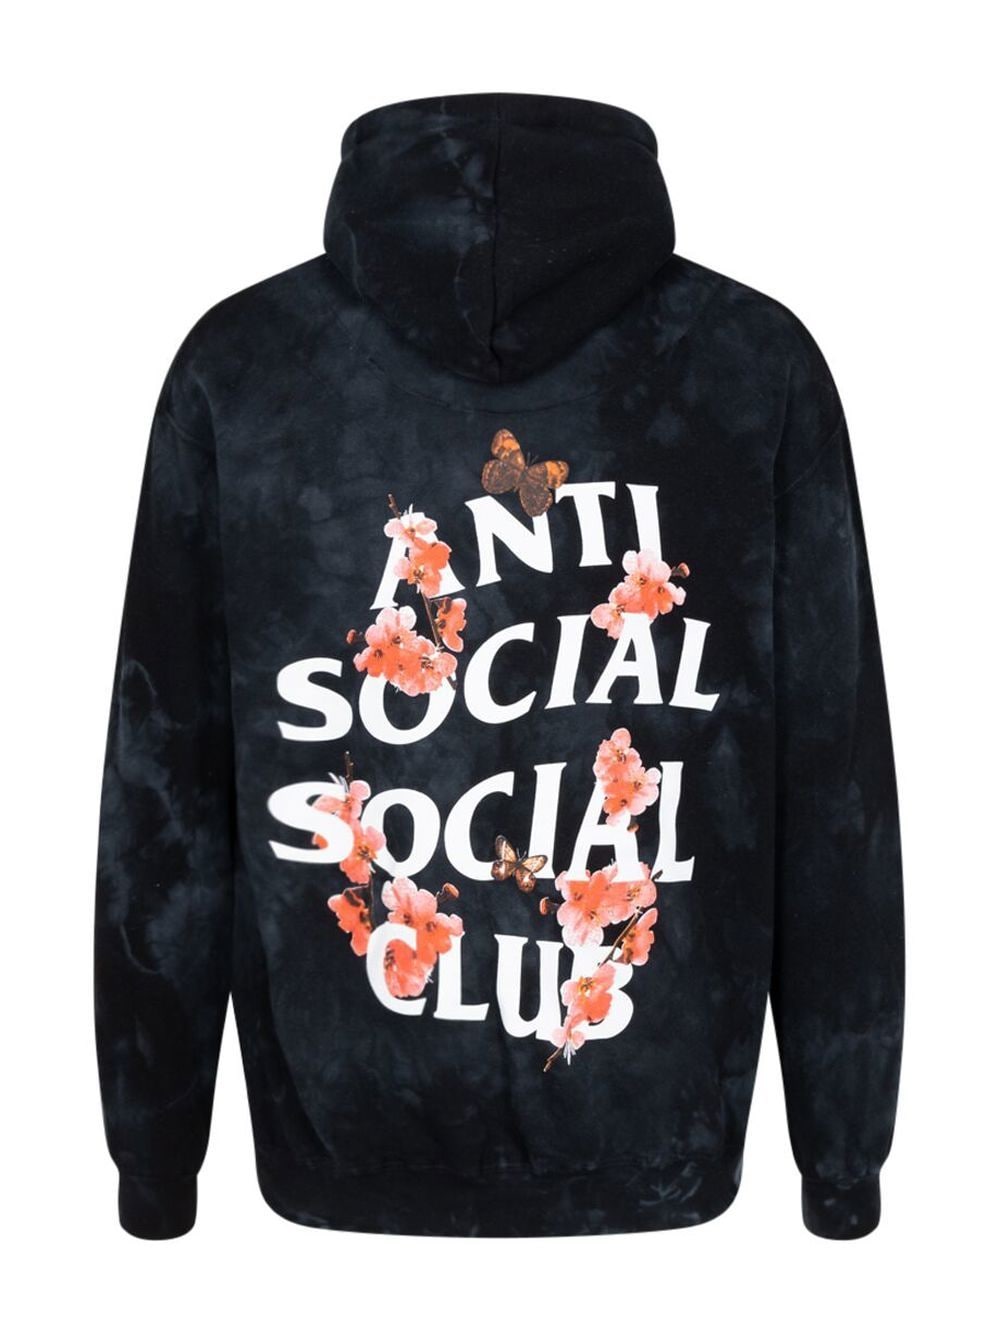 Anti Social Social Club - Kkoch Never Dies Tie Dye Hoodie - Clique Apparel